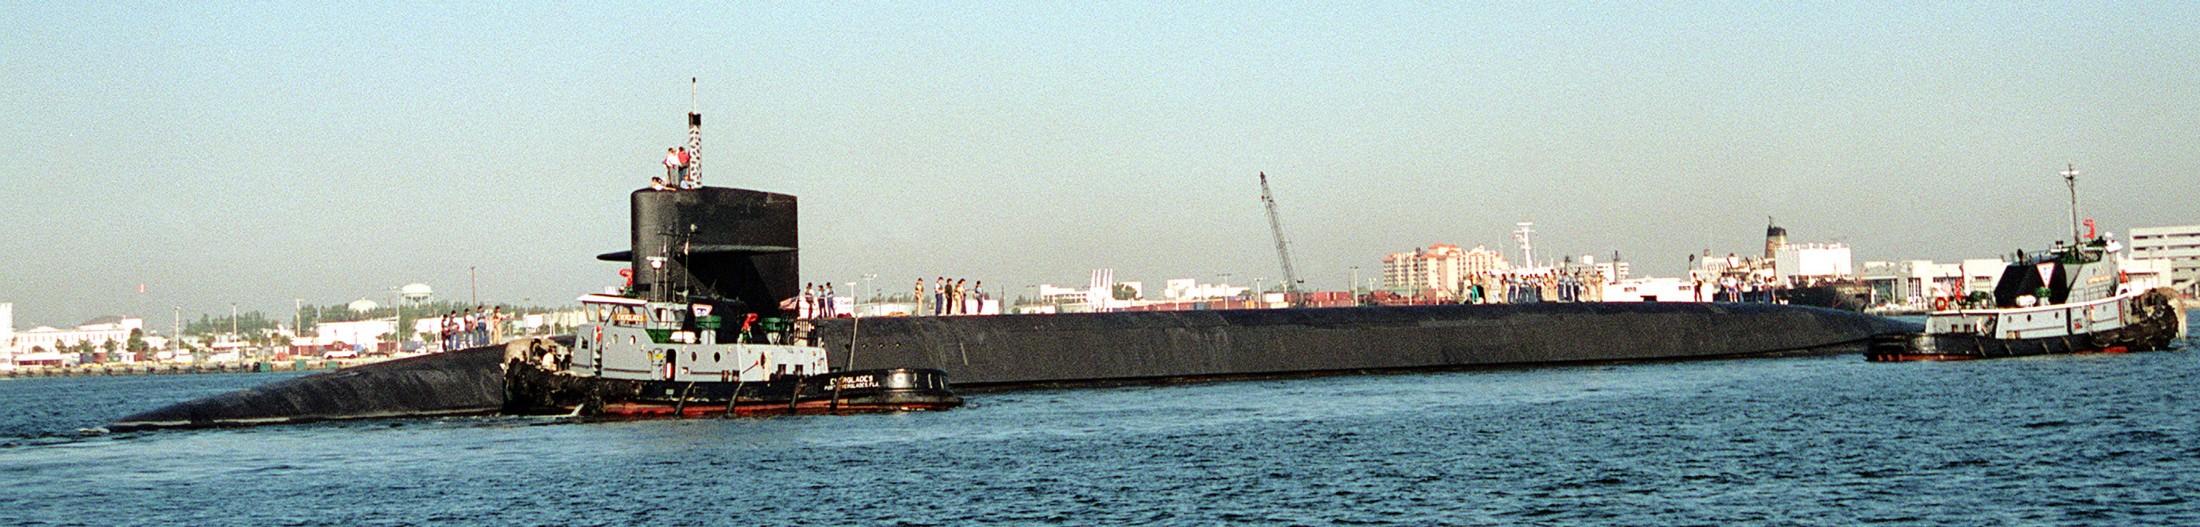 ssbn-728 uss florida ballistic missile submarine us navy 1995 59